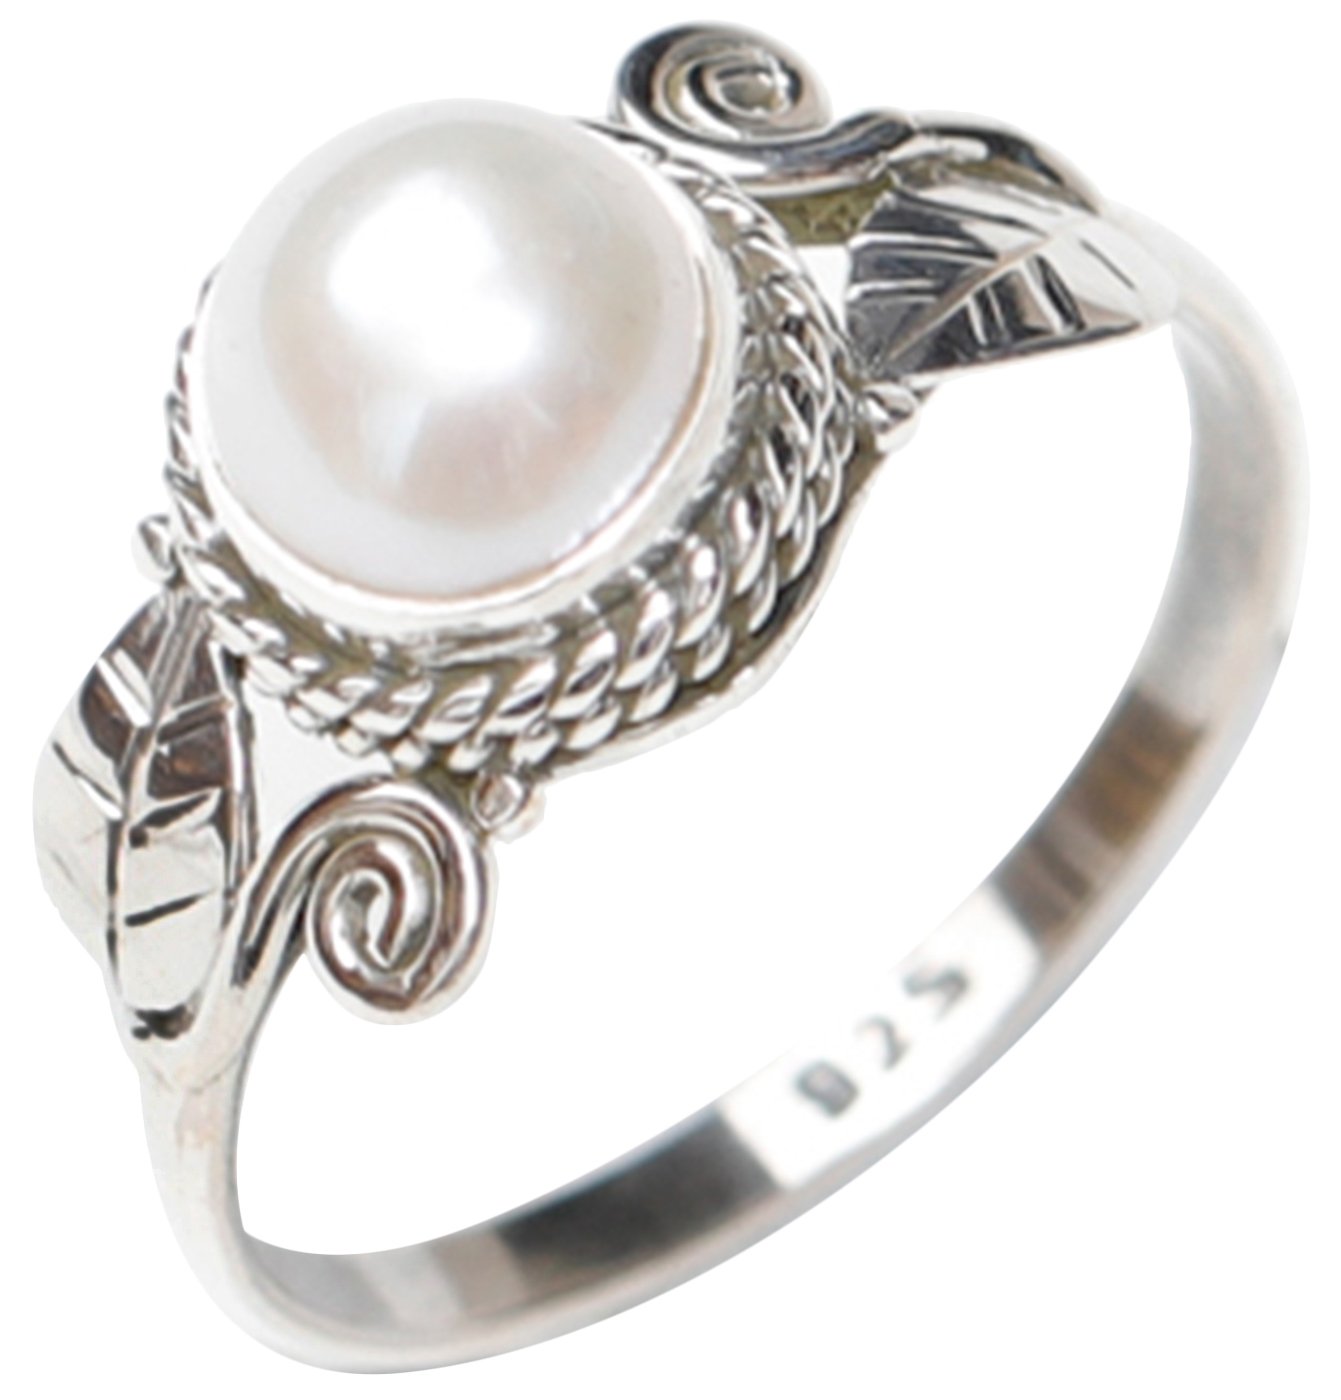 8 Moti ring ideas | pearl ring, gemstone rings, jewelry